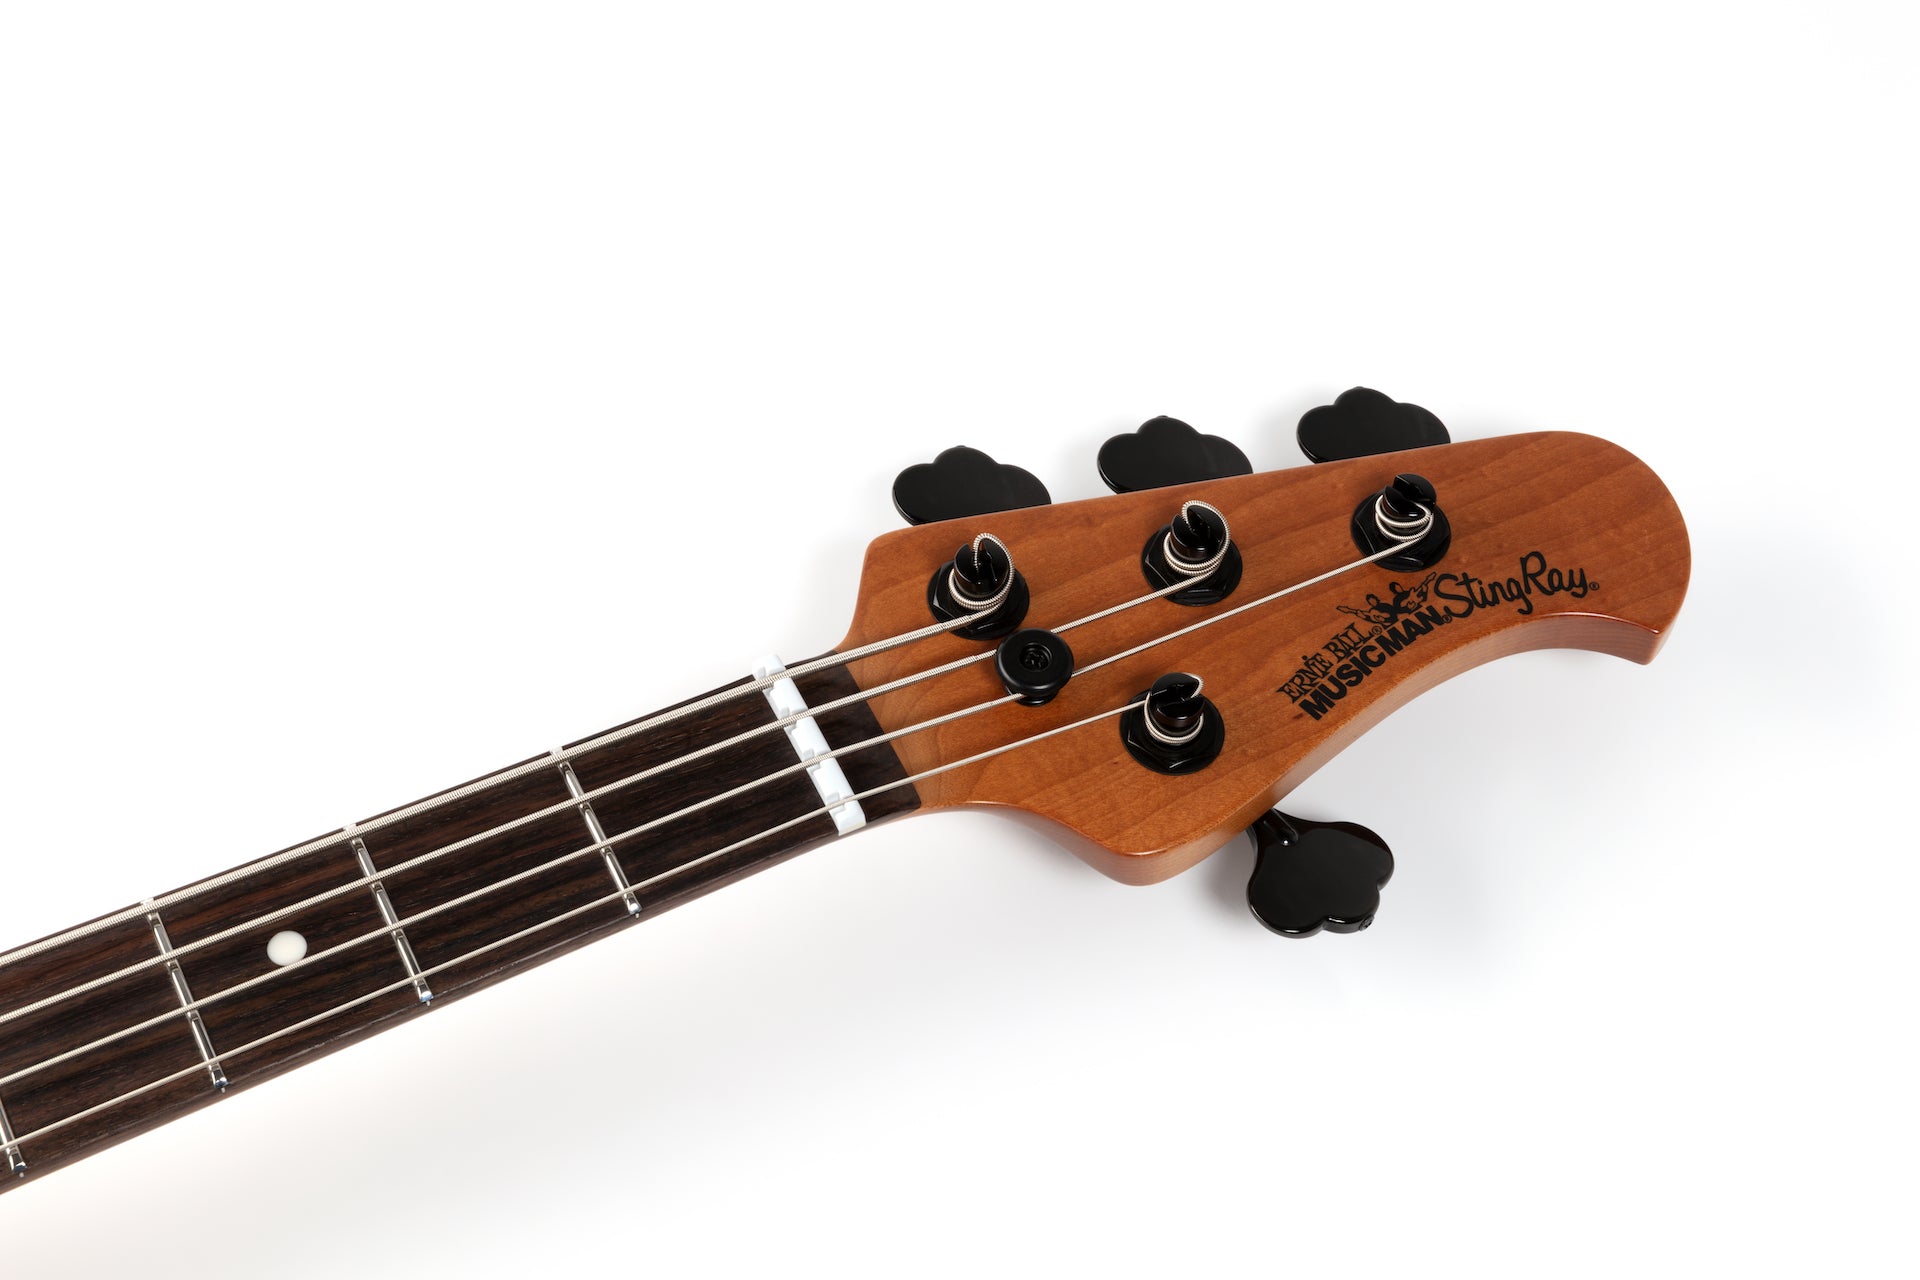 Ernie Ball Music Man StingRay Special 4 HH Bass Guitar - Speed Blue with Rosewood Fingerboard F96521 - HIENDGUITAR   Musicman bass